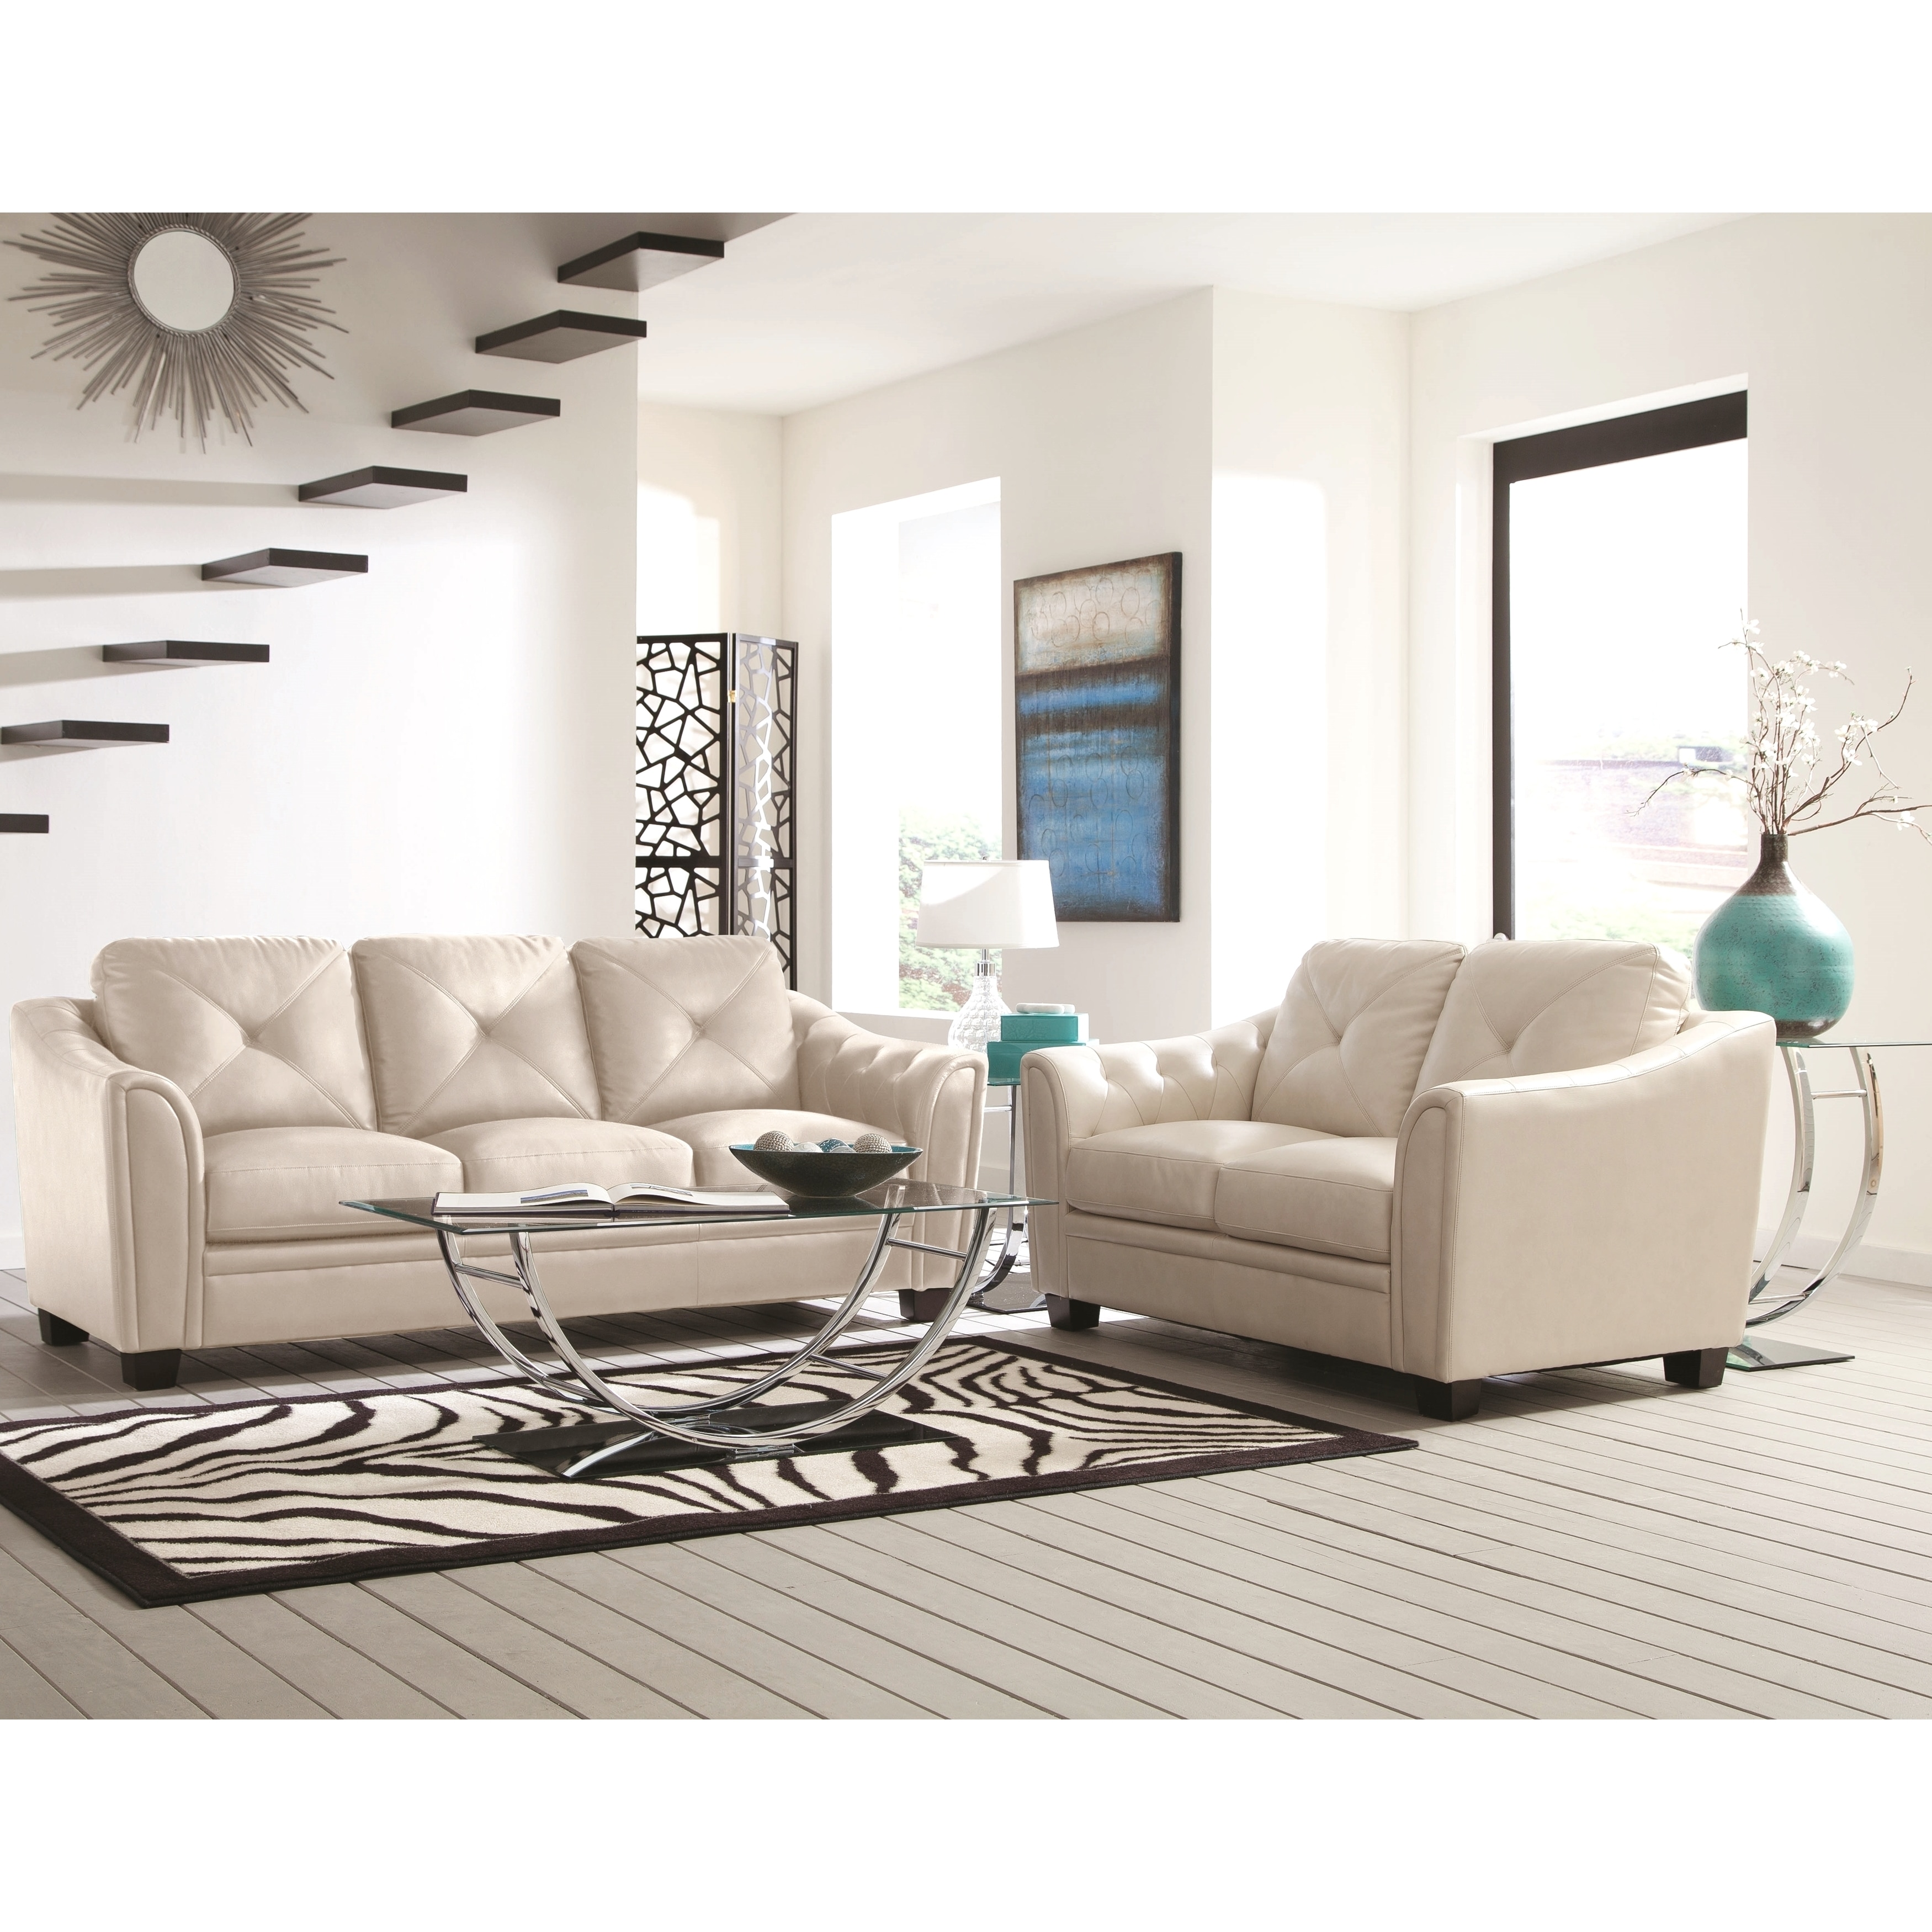 Lacasta Mid Century Modern Tufted Design Cream Living Room Sofa Collection Overstock 13255150